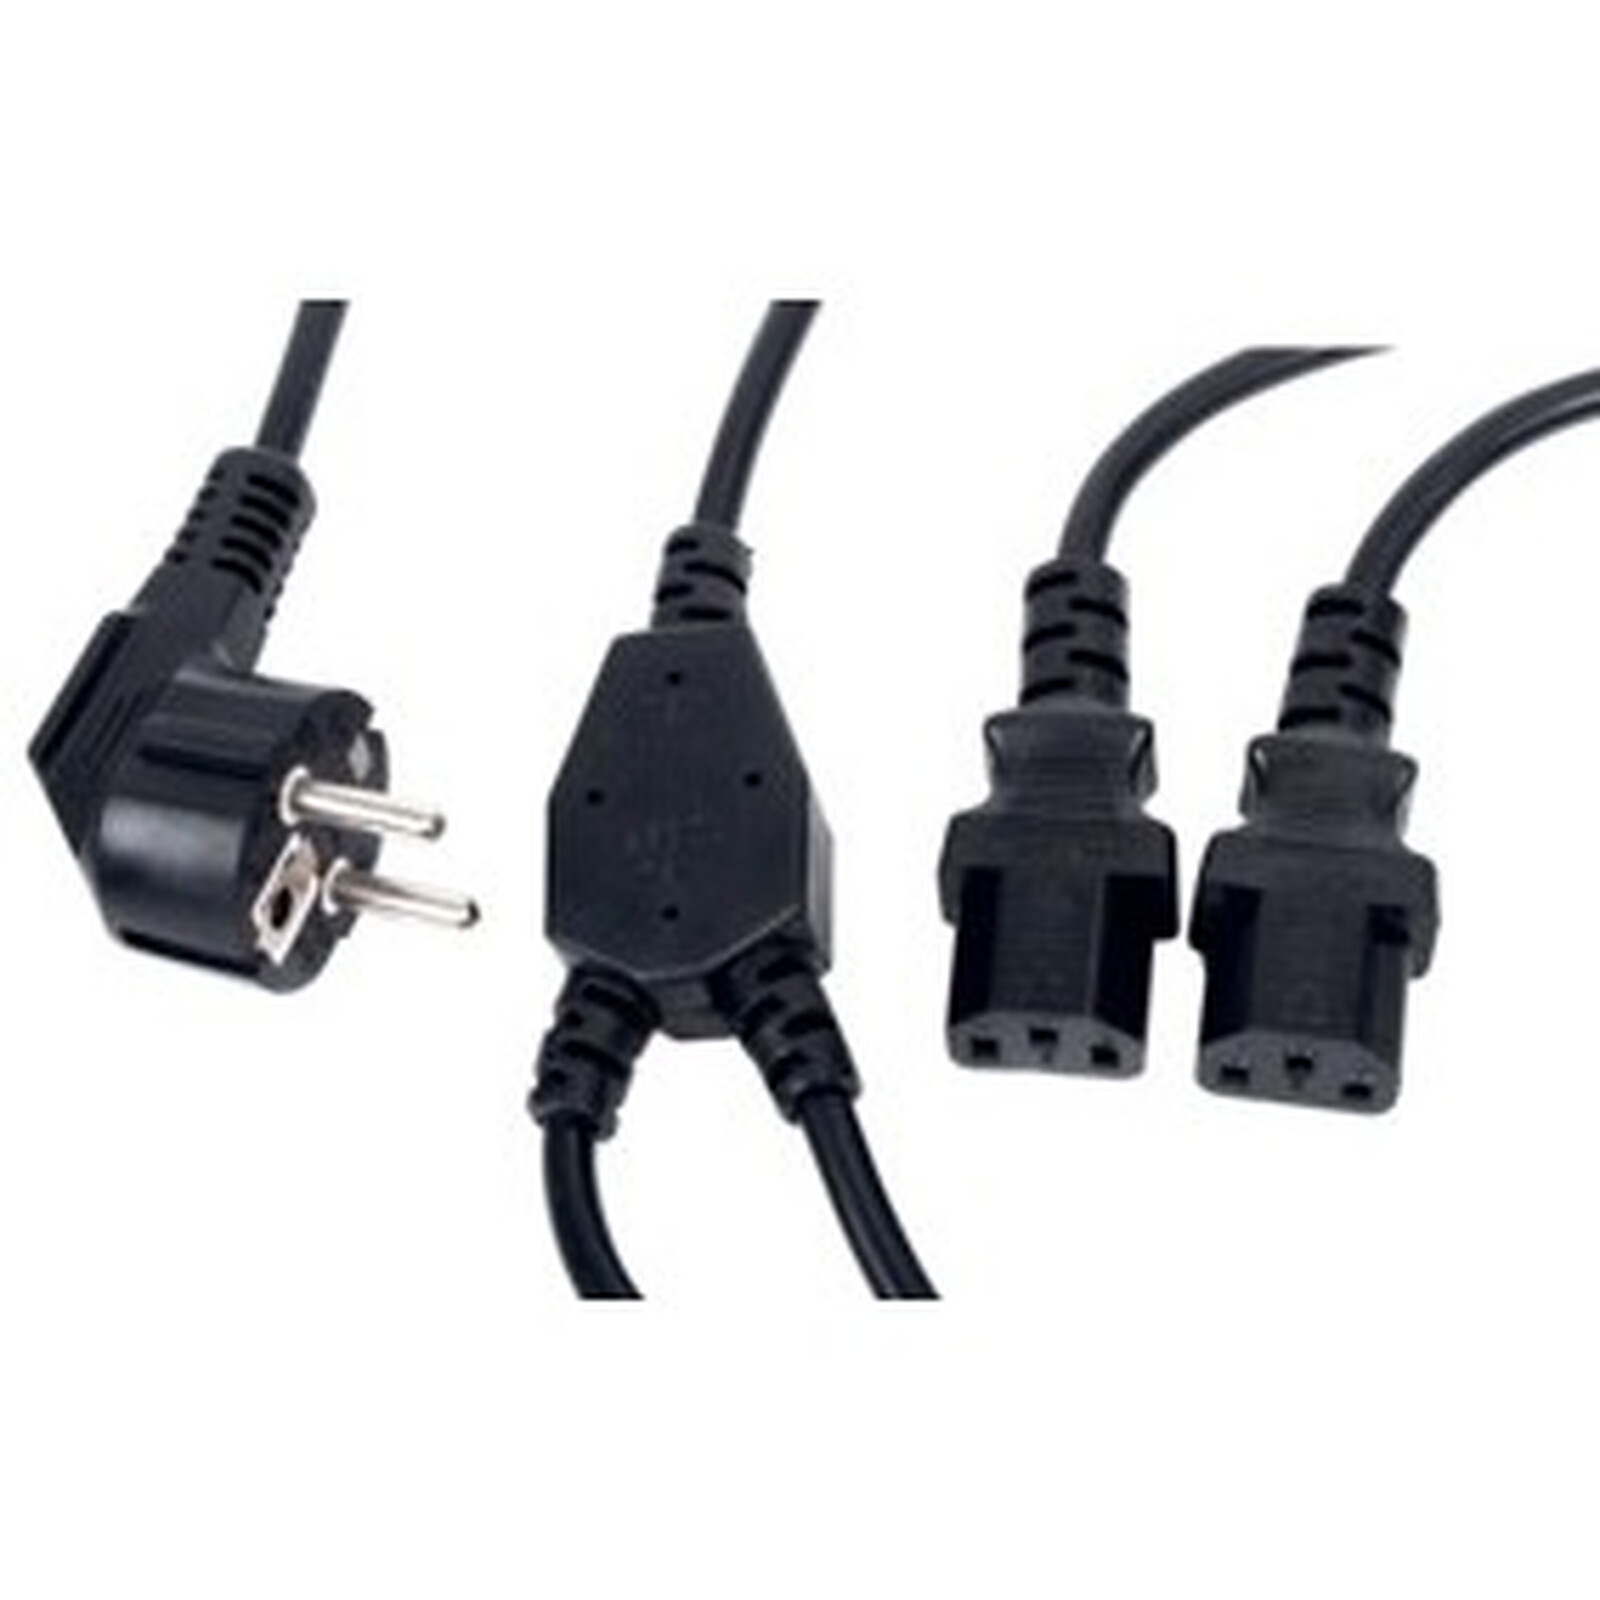 Doble cable de alimentación para PC, monitor y ondulador (1,8 m